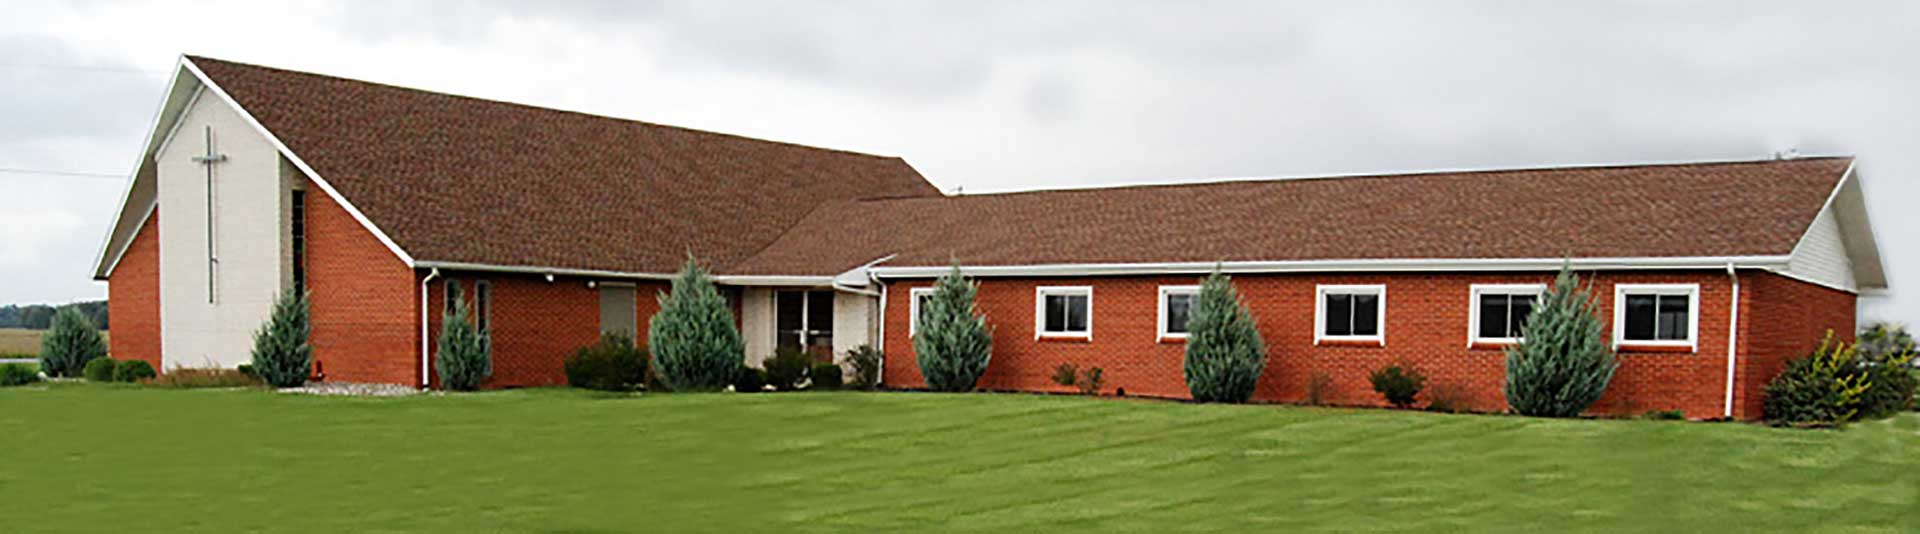 image of the bible fellowship church in paulding Ohio